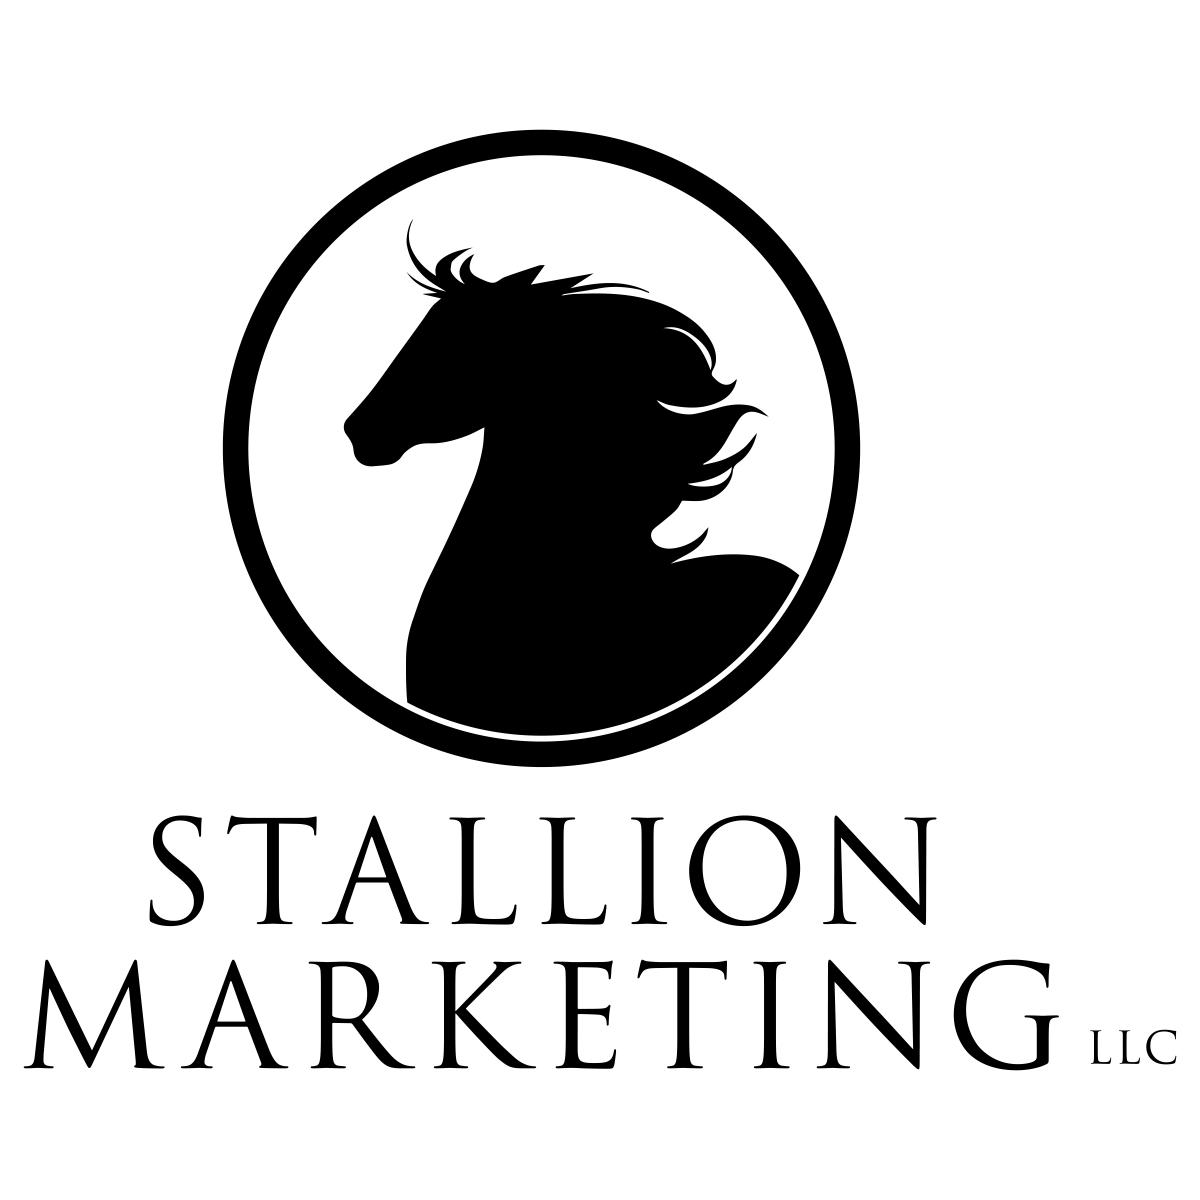 Stallion Events